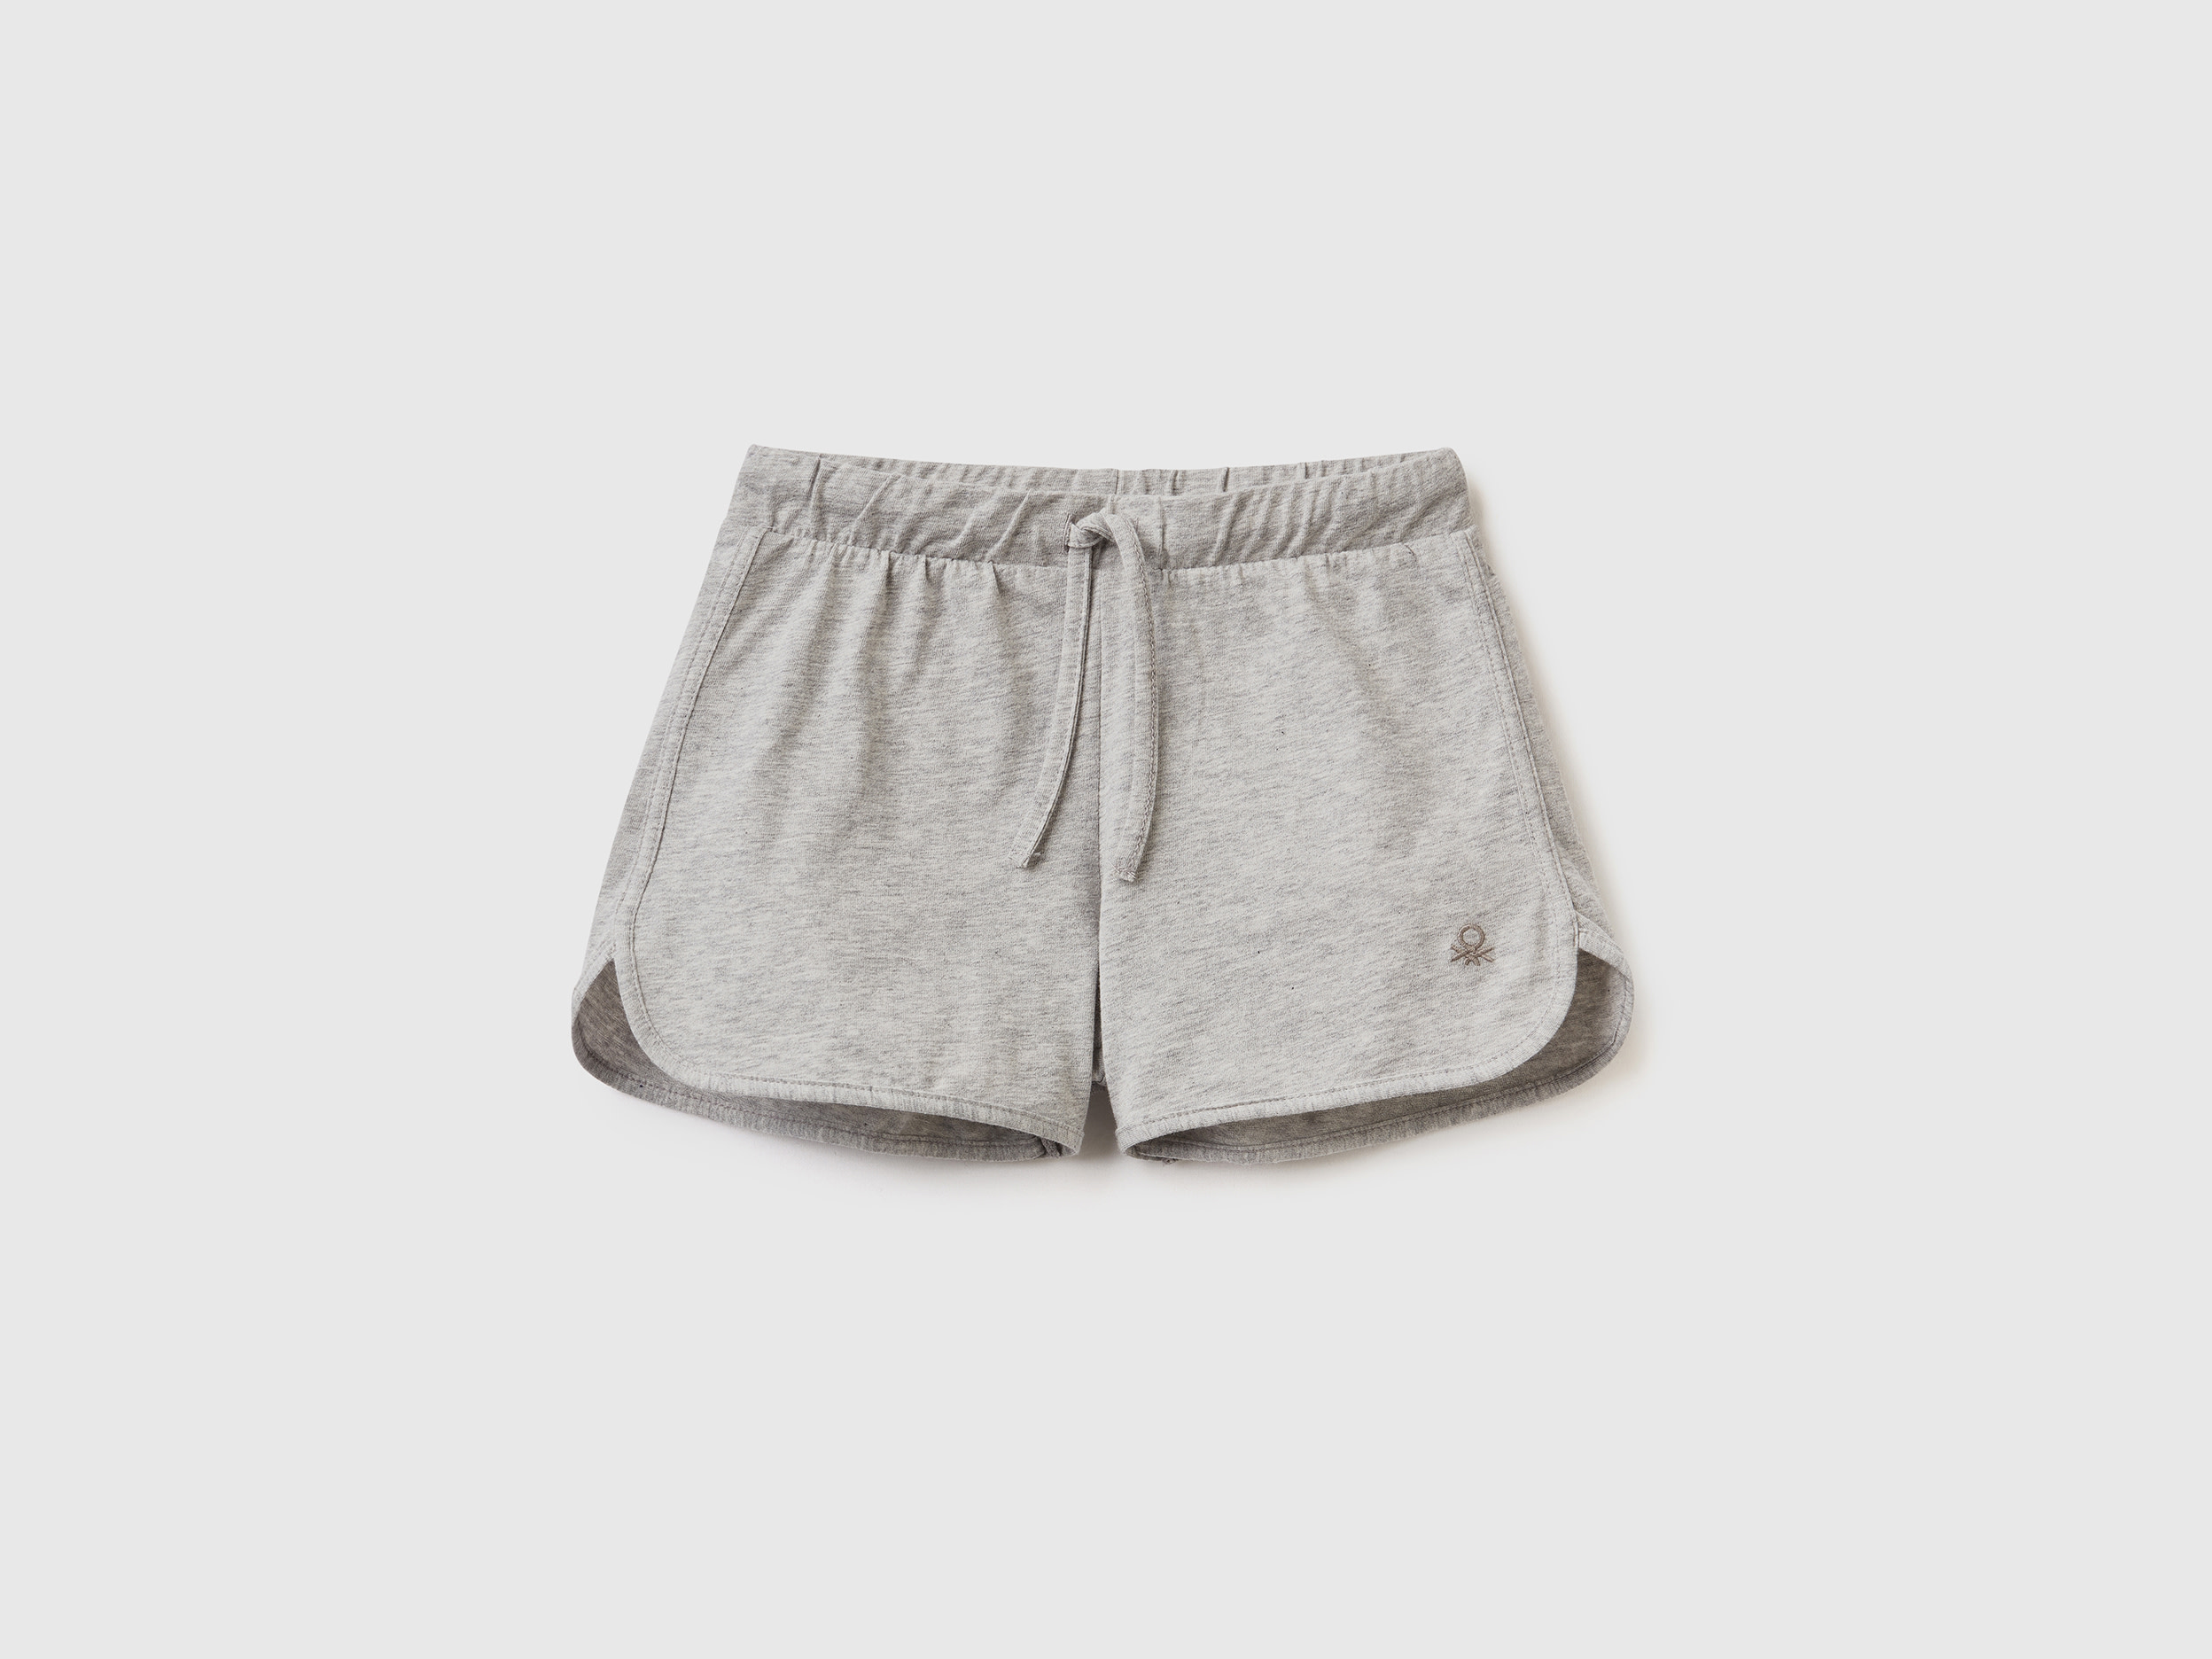 Benetton, Runner Style Shorts In Organic Cotton, size 3XL, Light Gray, Kids